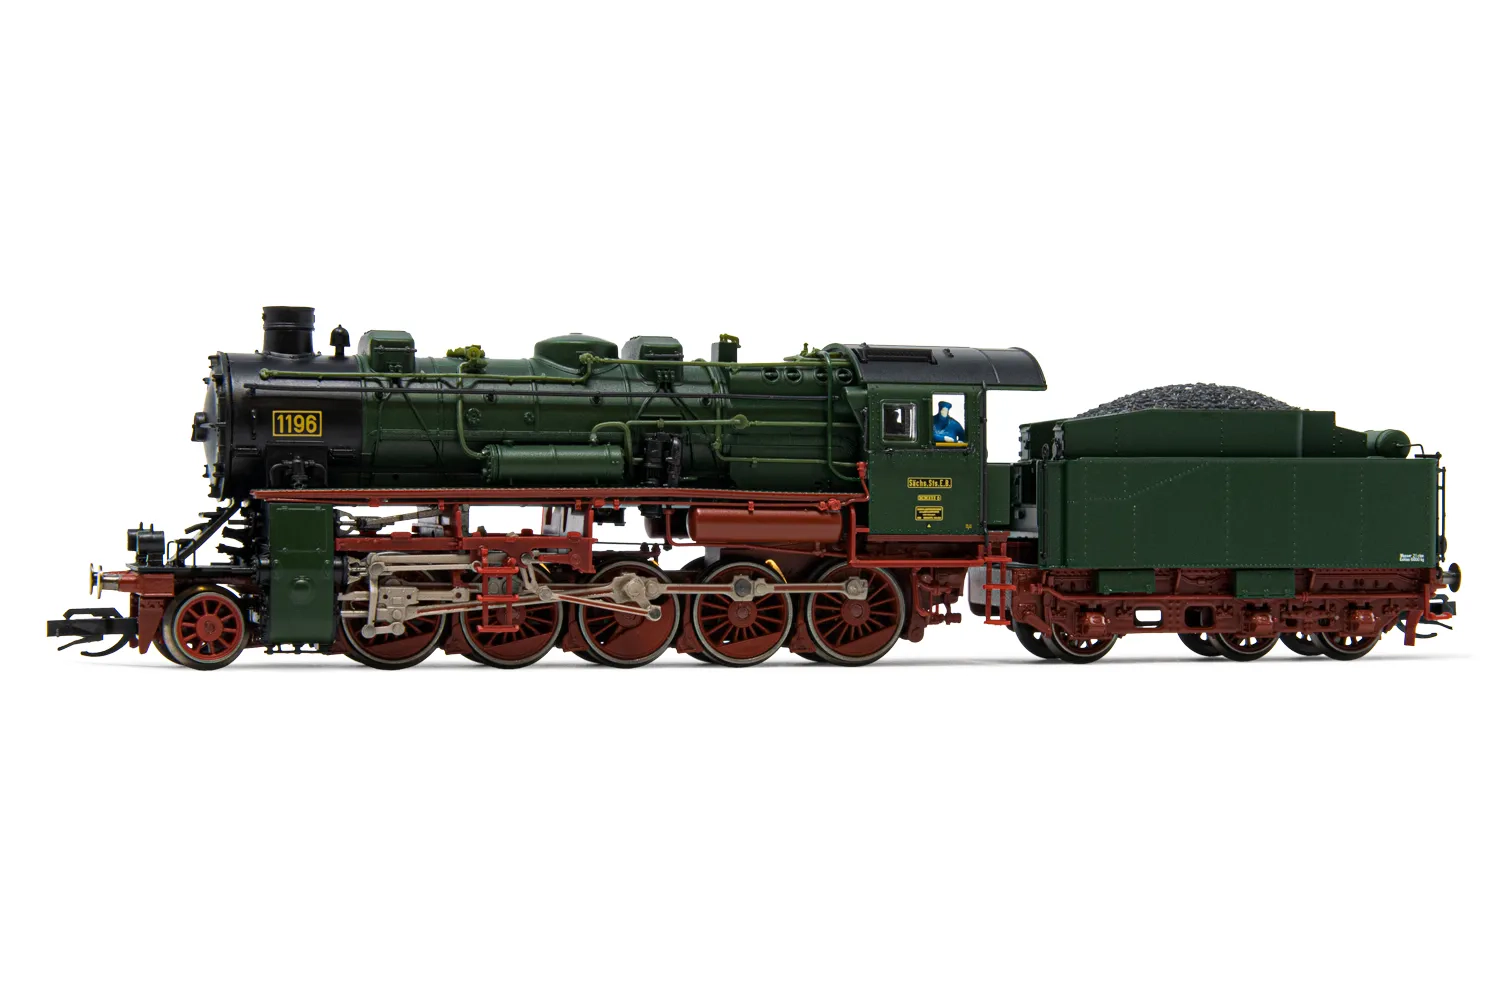 Kgl.Sächs. Sts.E.B., Dampflokomotive Reihe XIII H 1196, in grüner Lackierung, Ep. I